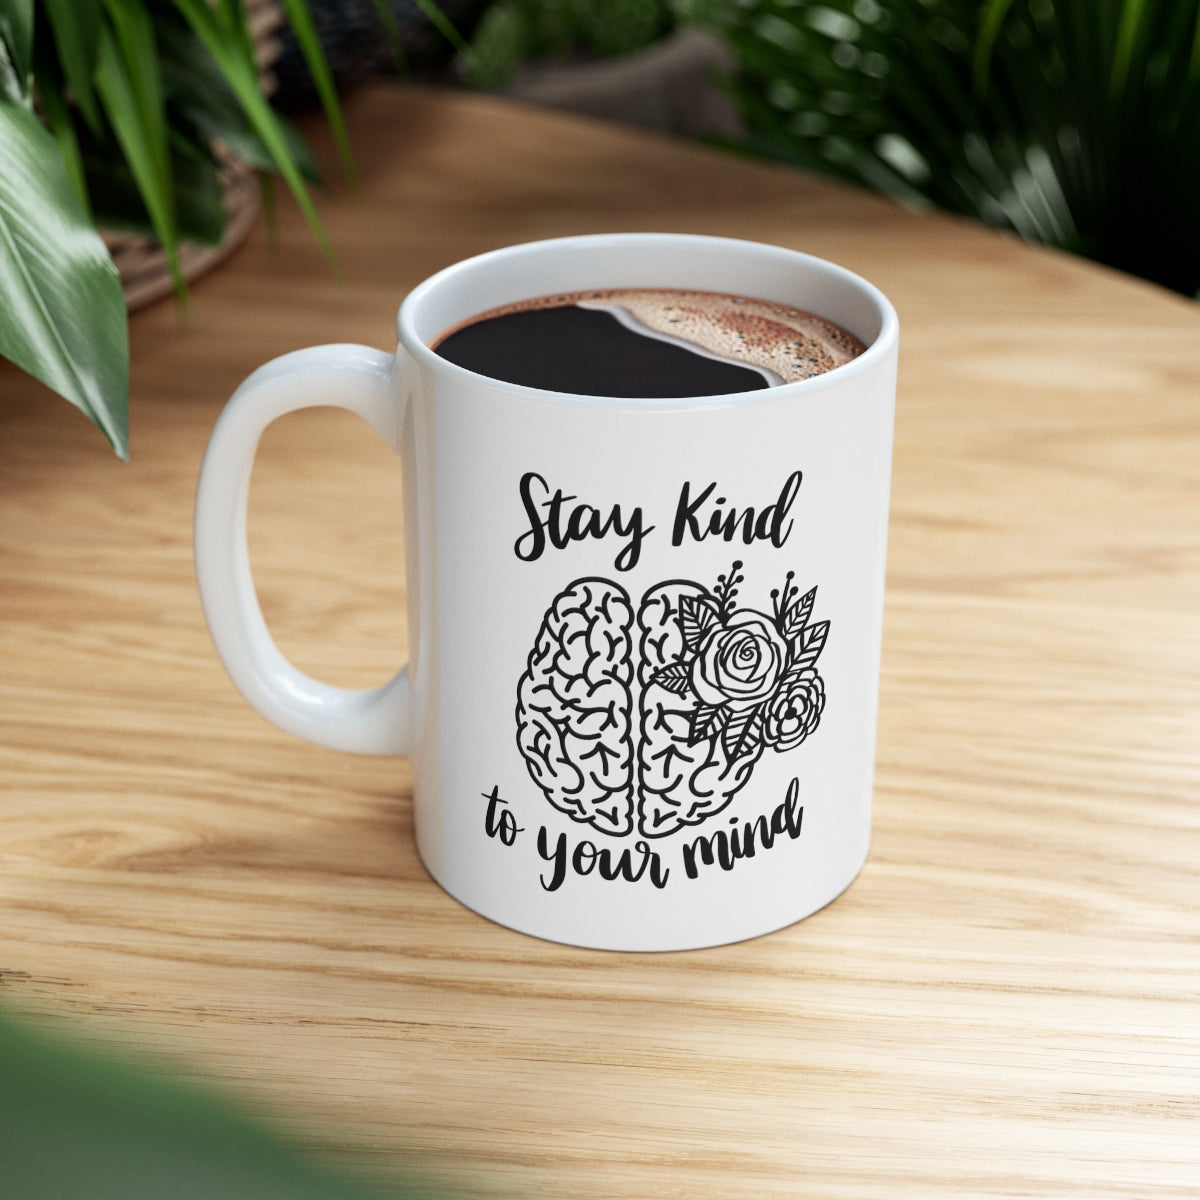 Stay Kind to Your Mind Ceramic Mug